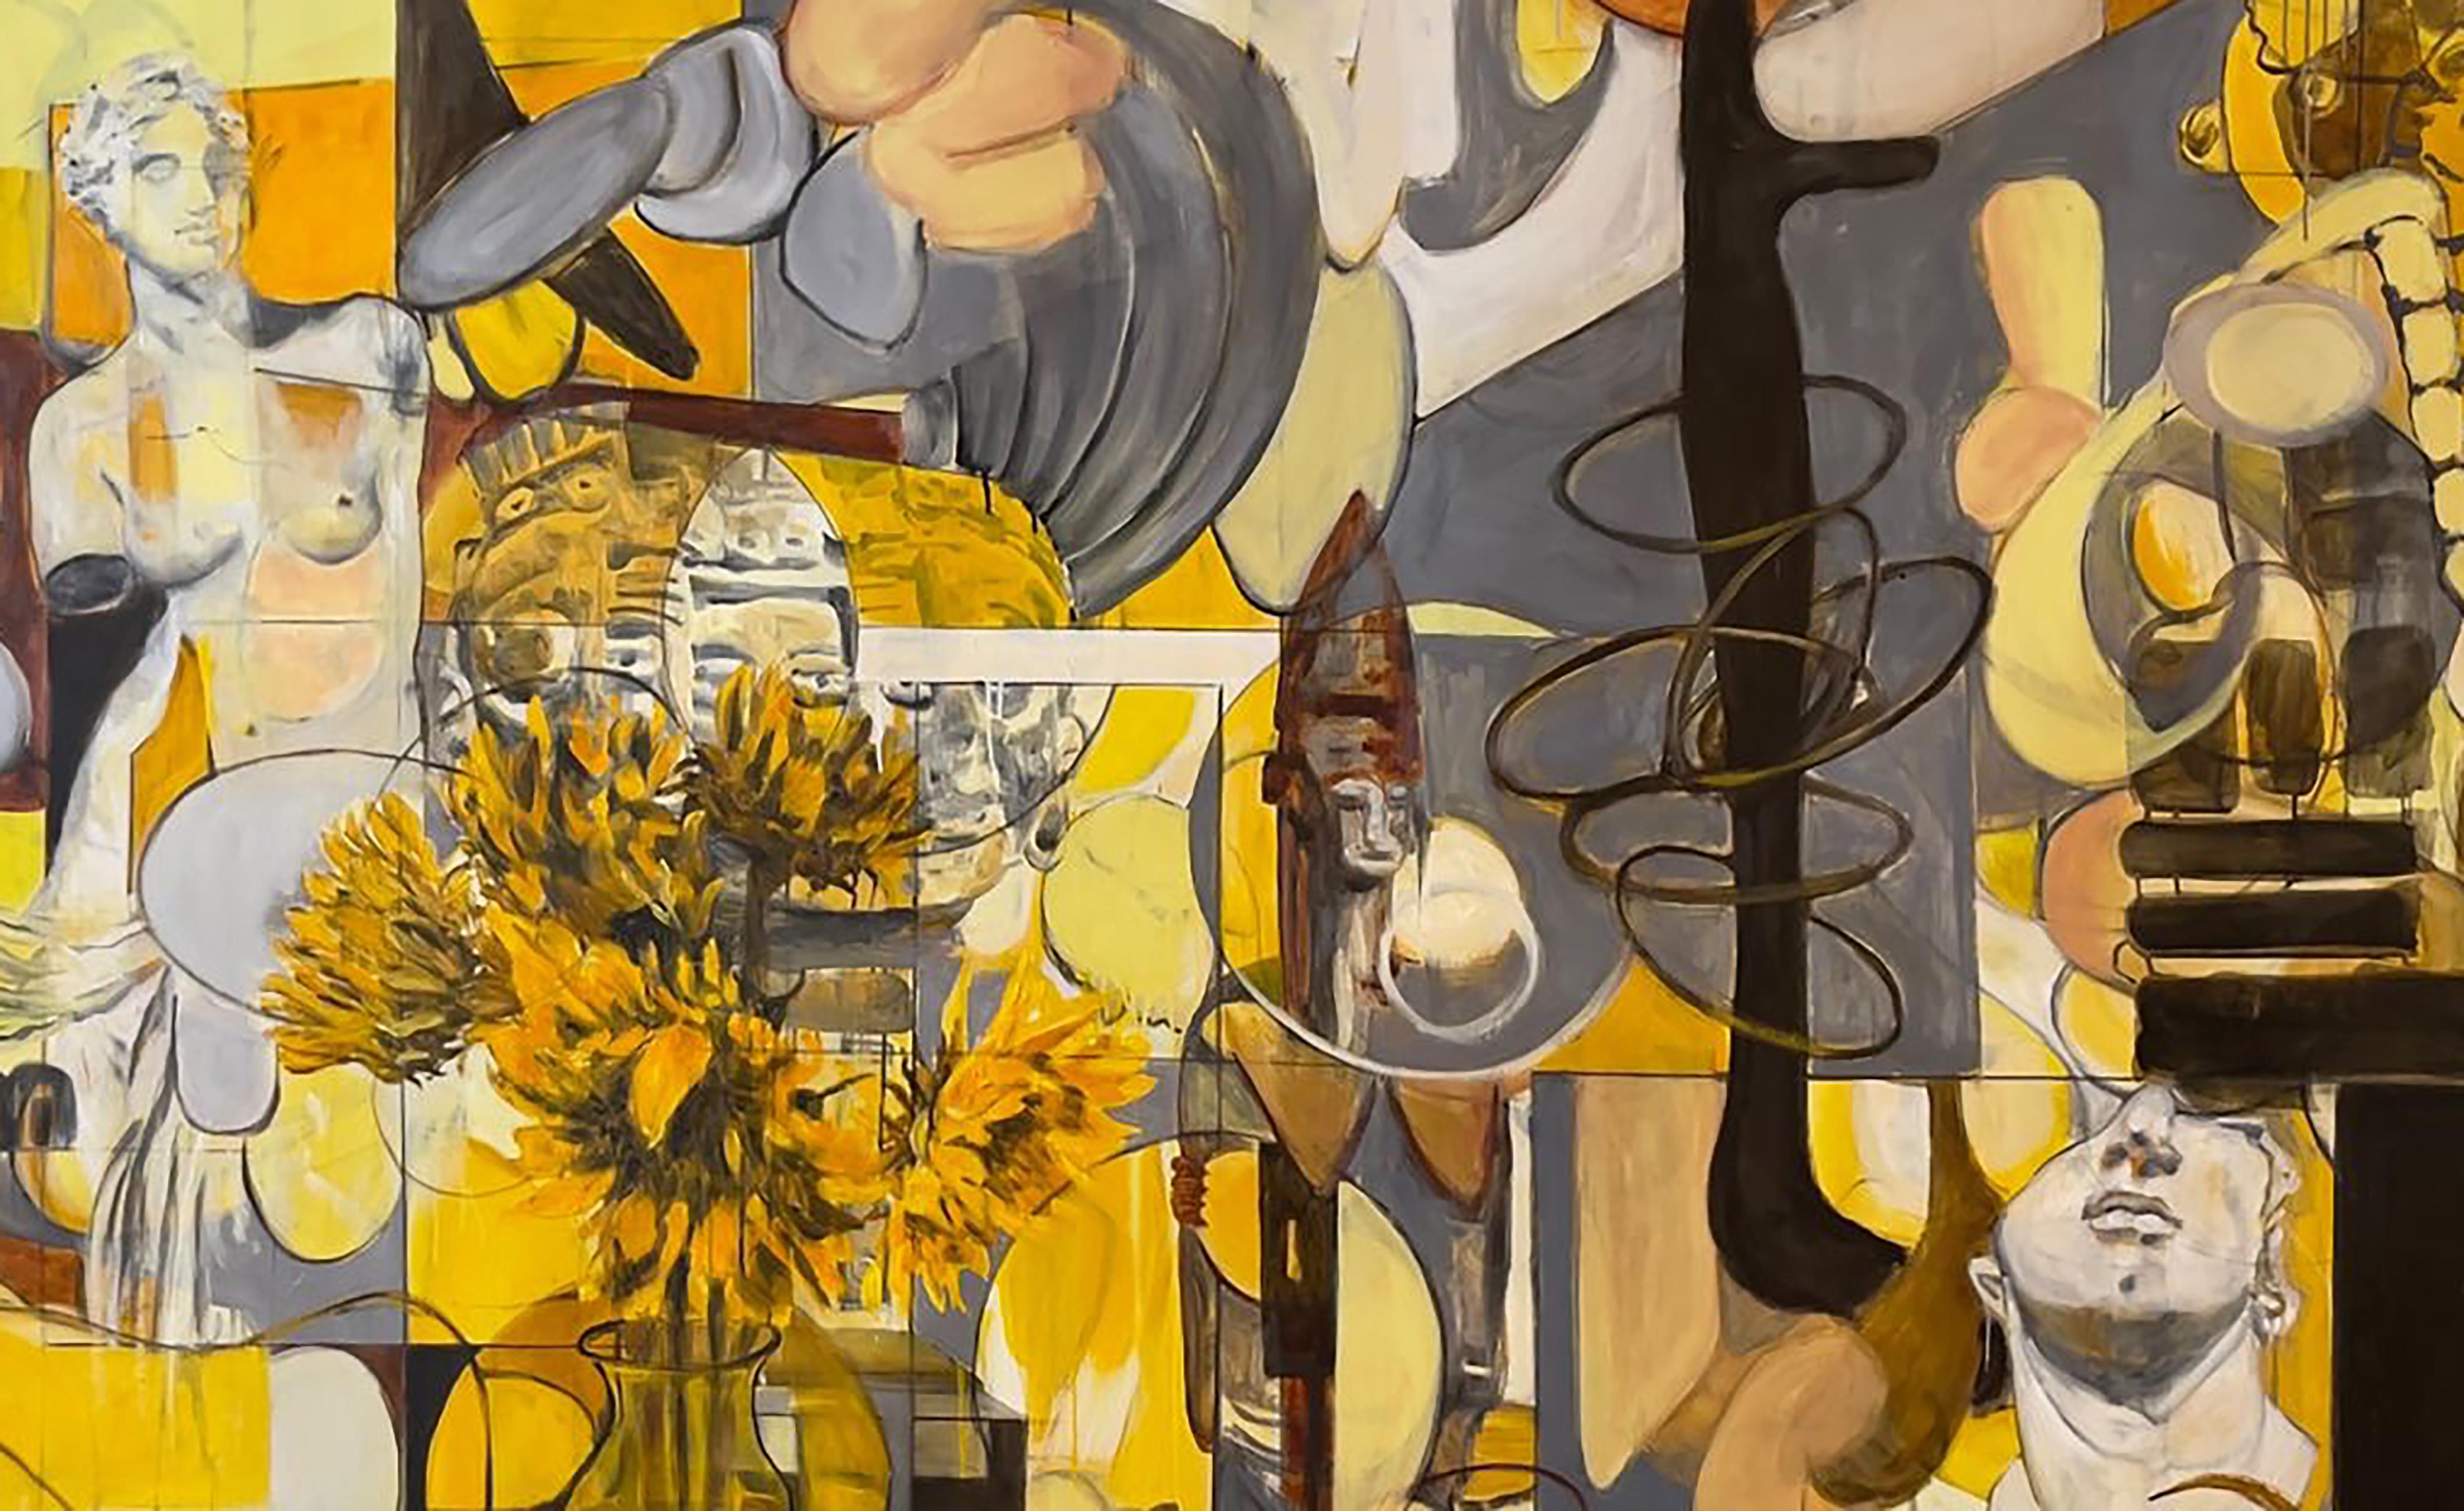 Valerie Campos
Yellow Studio, 2022
Oil on linen
78 x 110 in